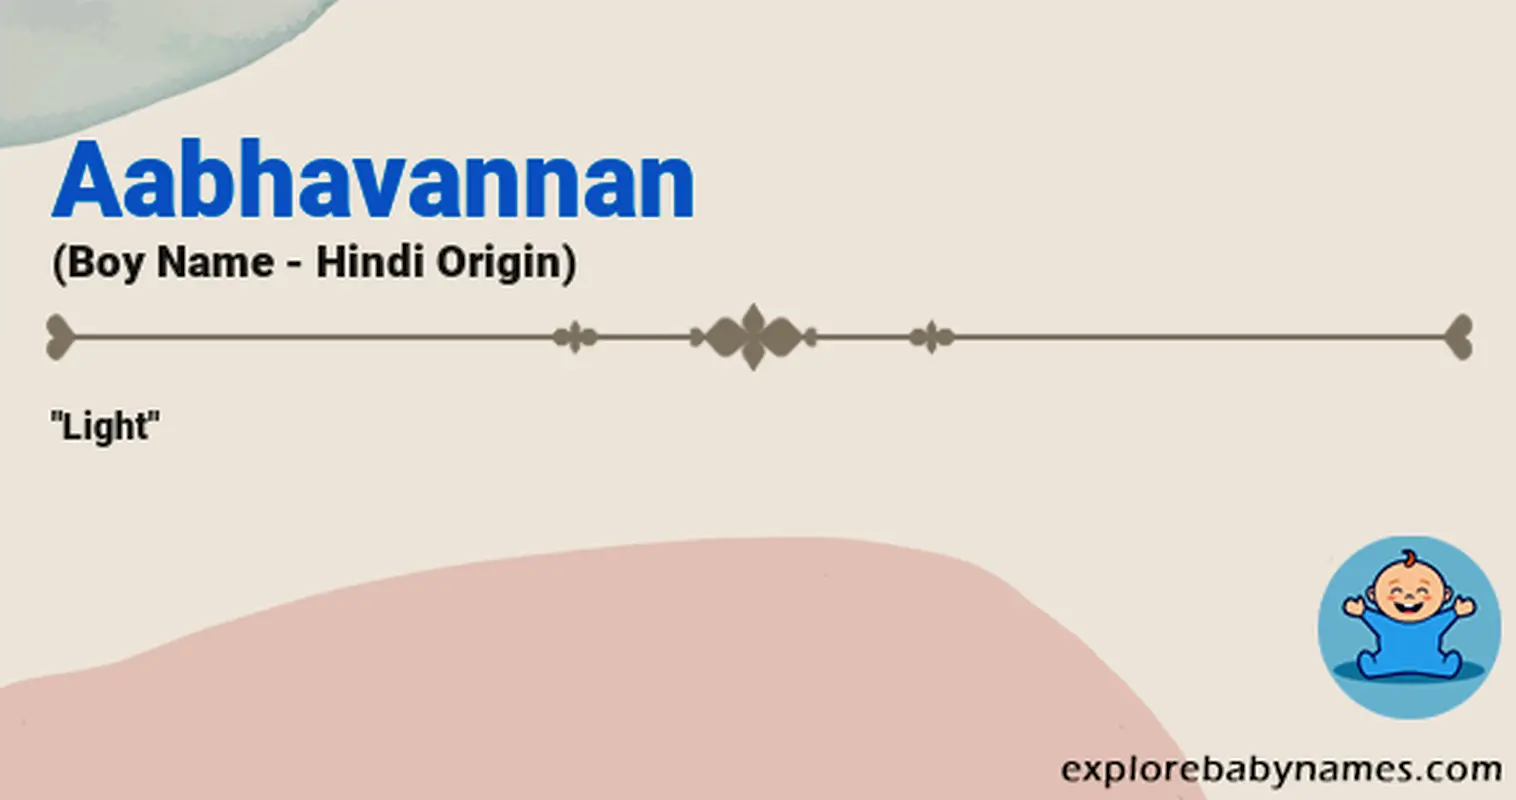 Meaning of Aabhavannan